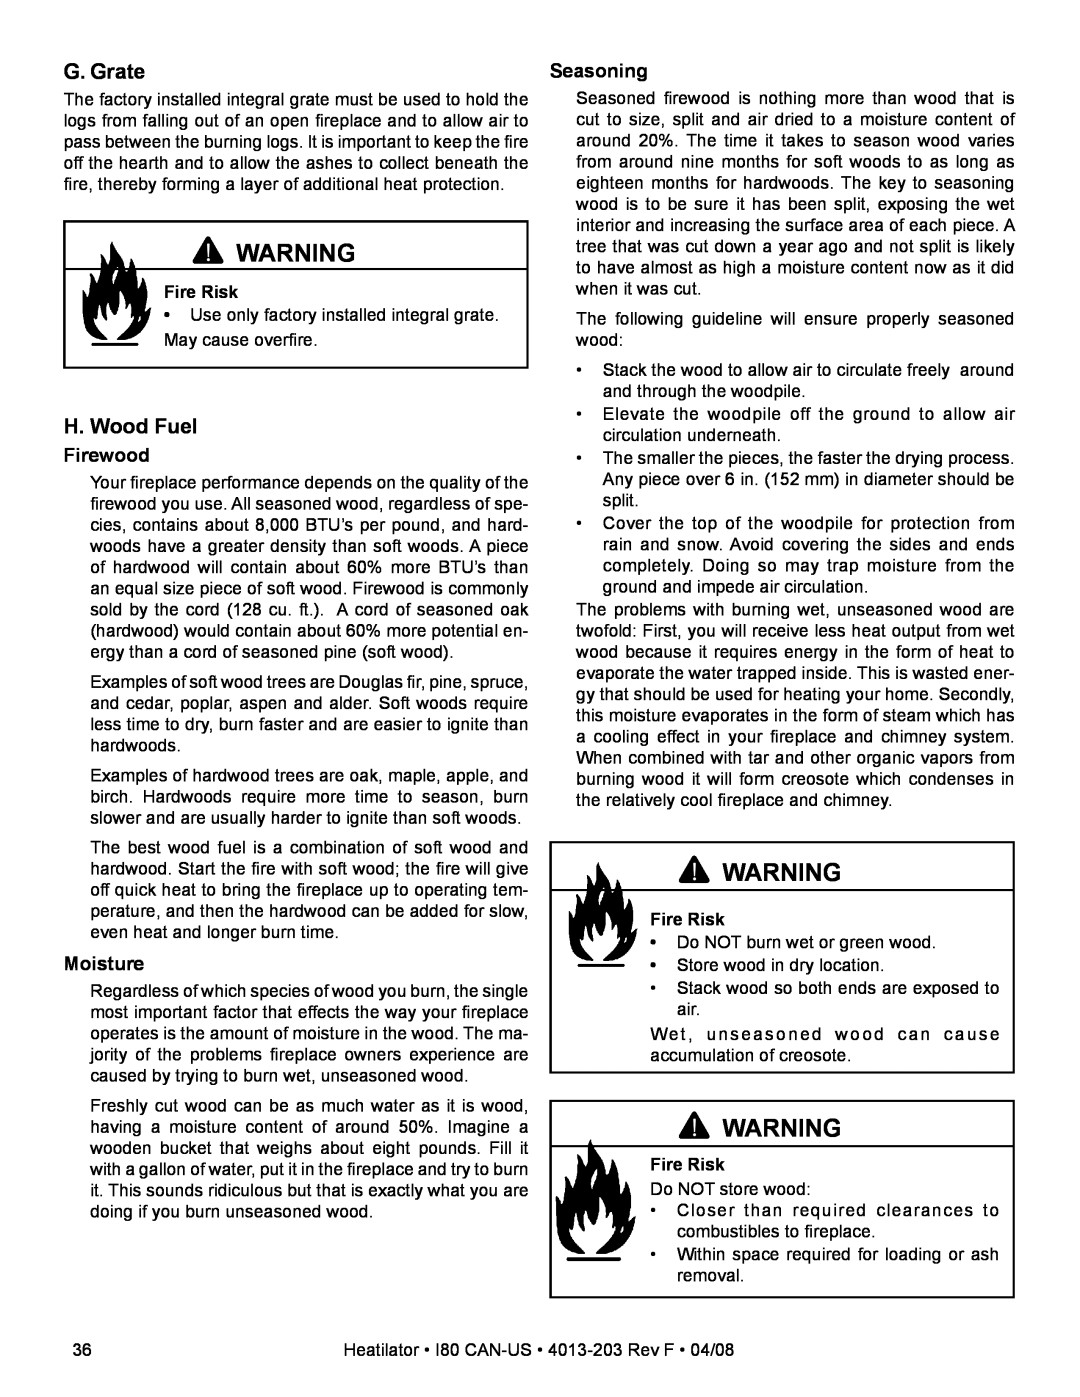 Heatiator I80 owner manual G. Grate, H.Wood Fuel, Firewood, Moisture, Seasoning, Fire Risk 